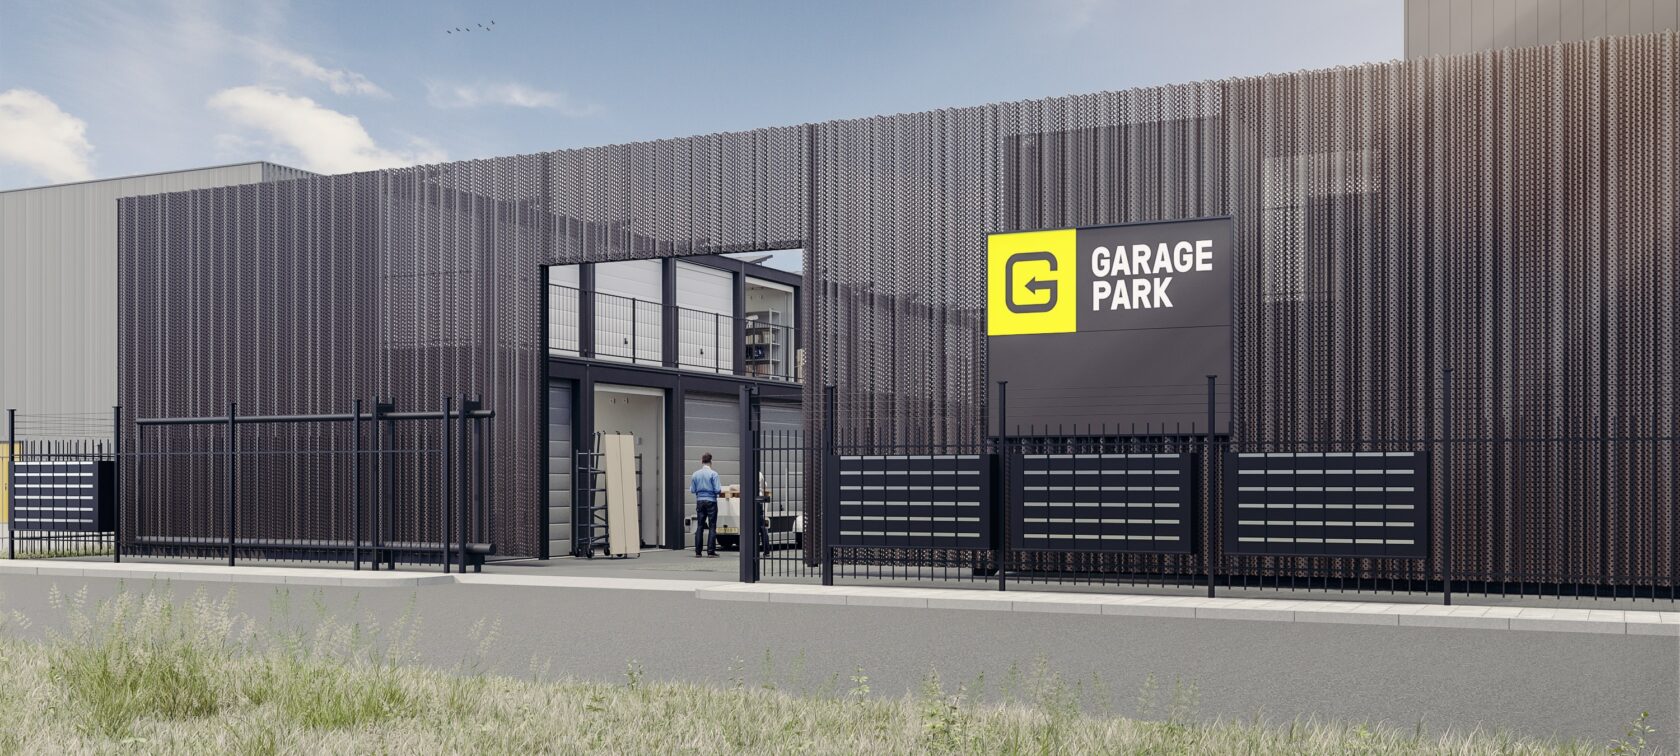 GaragePark Nieuwegein Vrijewade